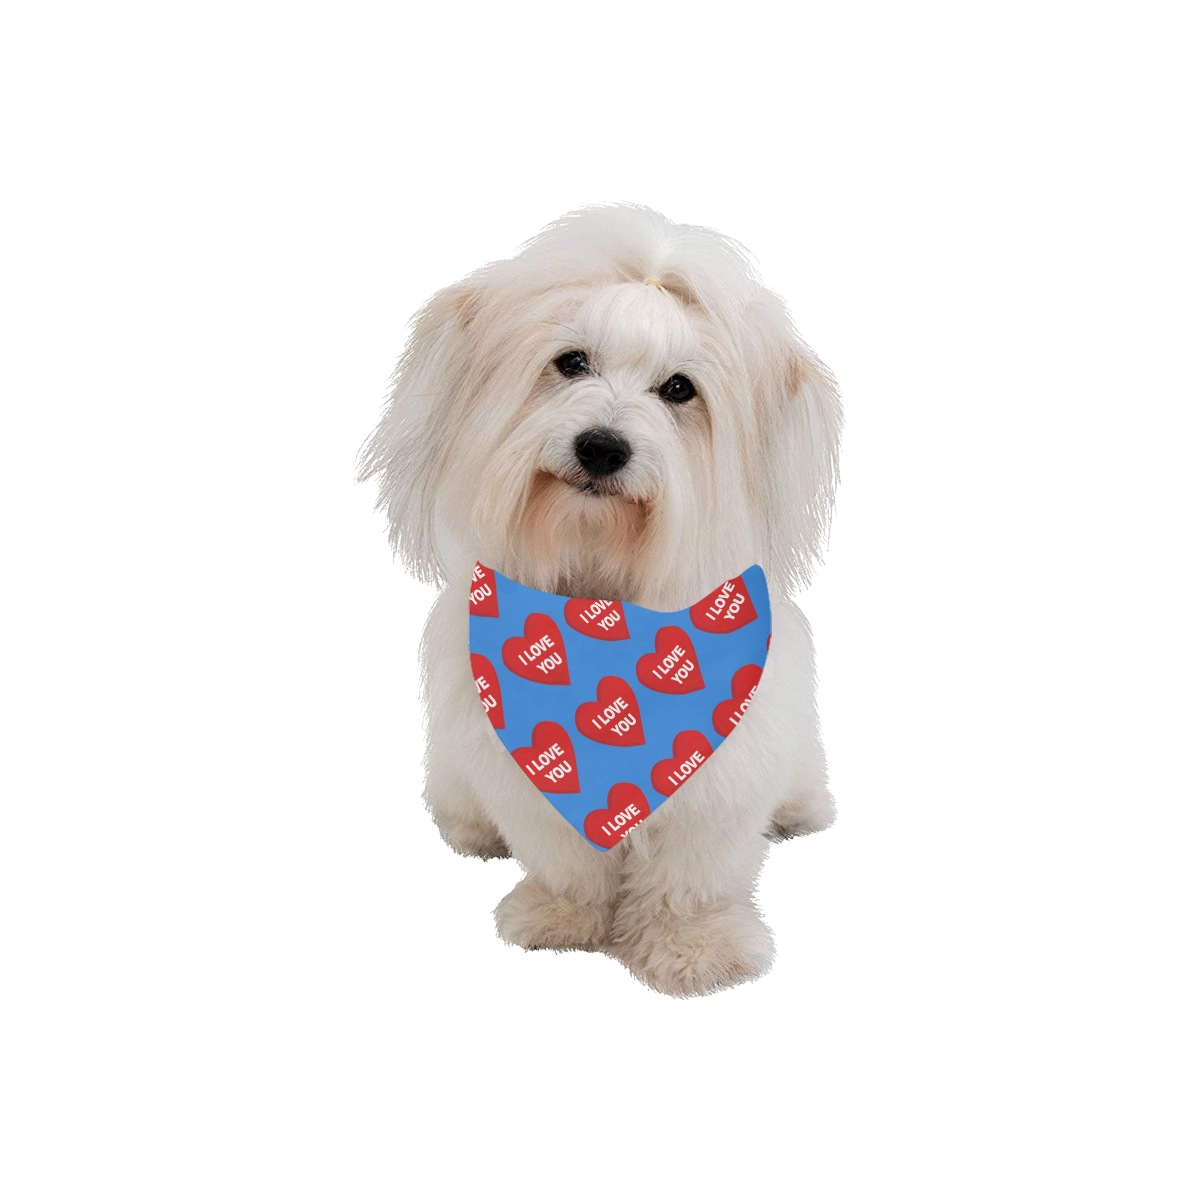 I love you in heart - BLUE Pet Dog Bandana/Large Size